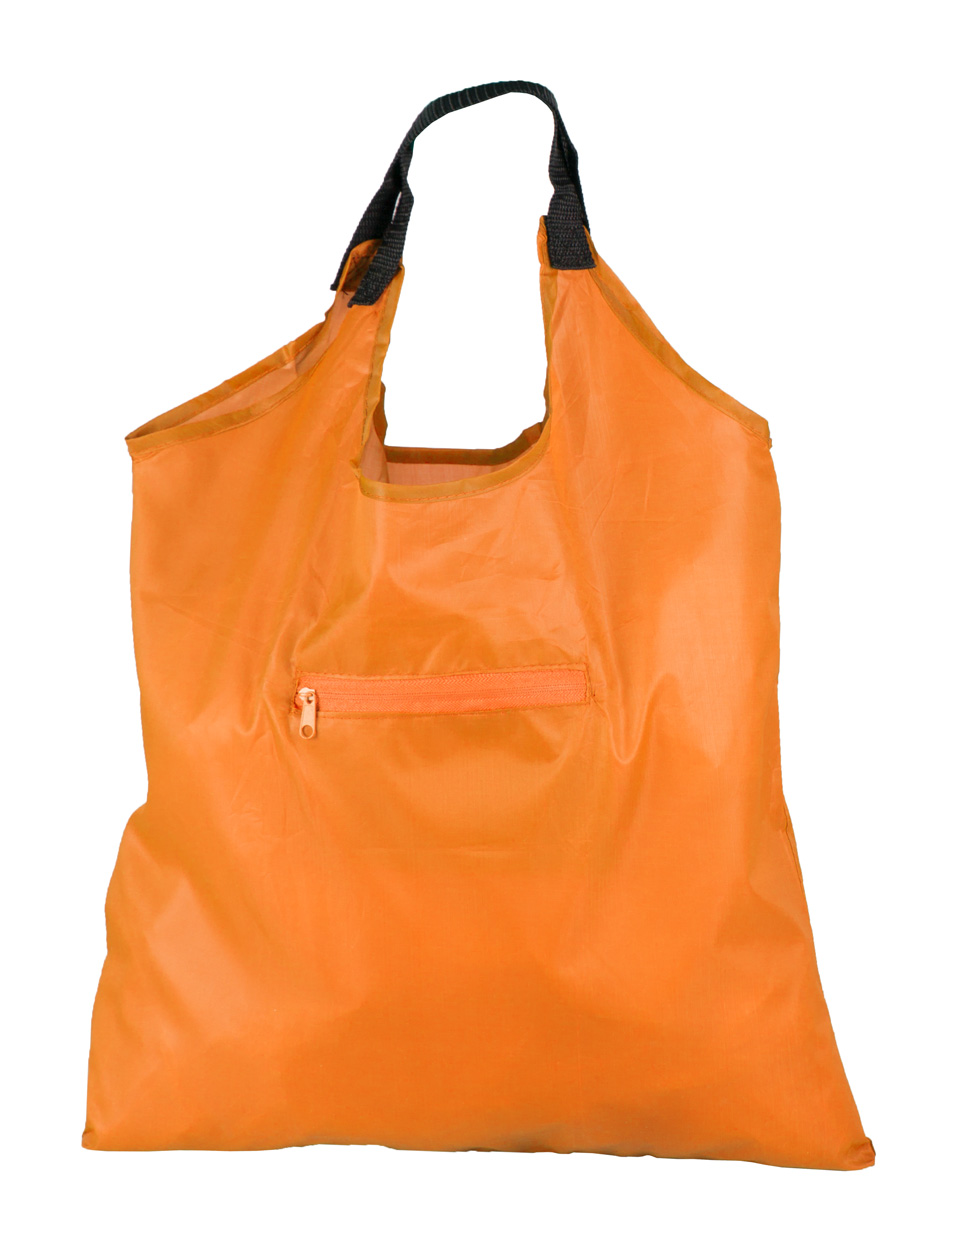 Kima foldable torba, narančaste boje s logom 